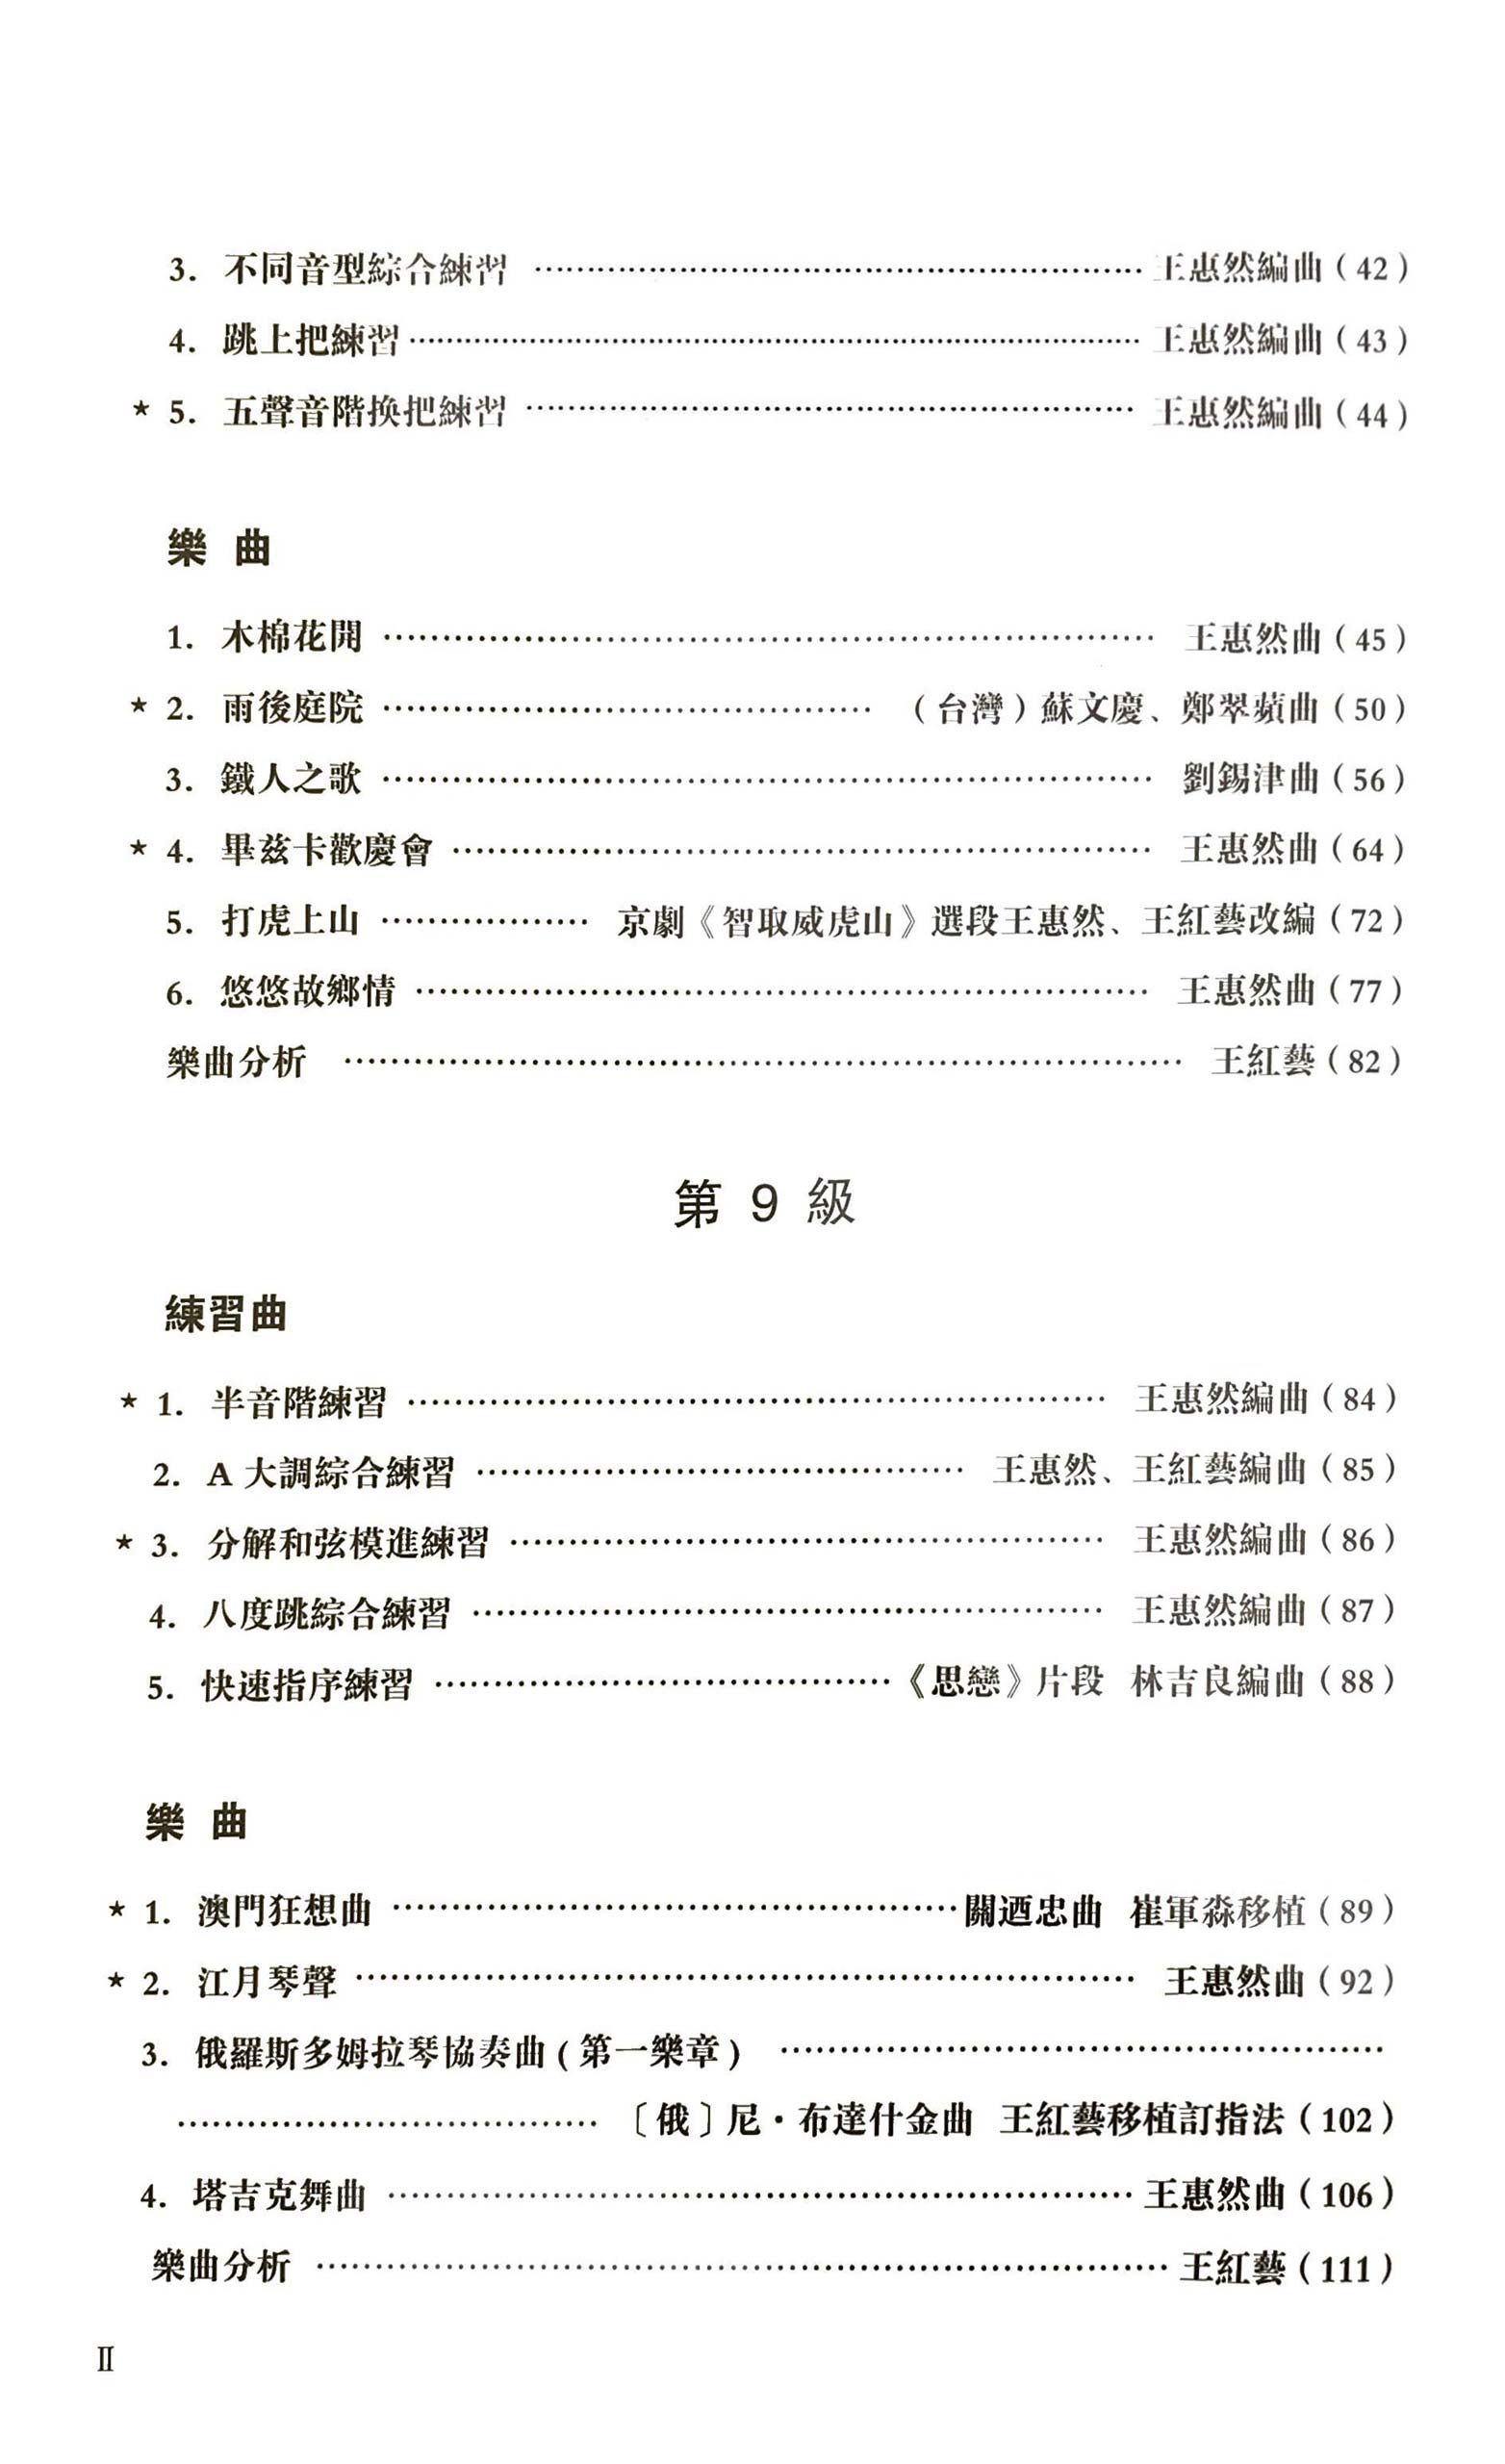 Liuqin Grading Examination Book by CCOM – NAFA (Beginner Grade 7-9) Content Page 2